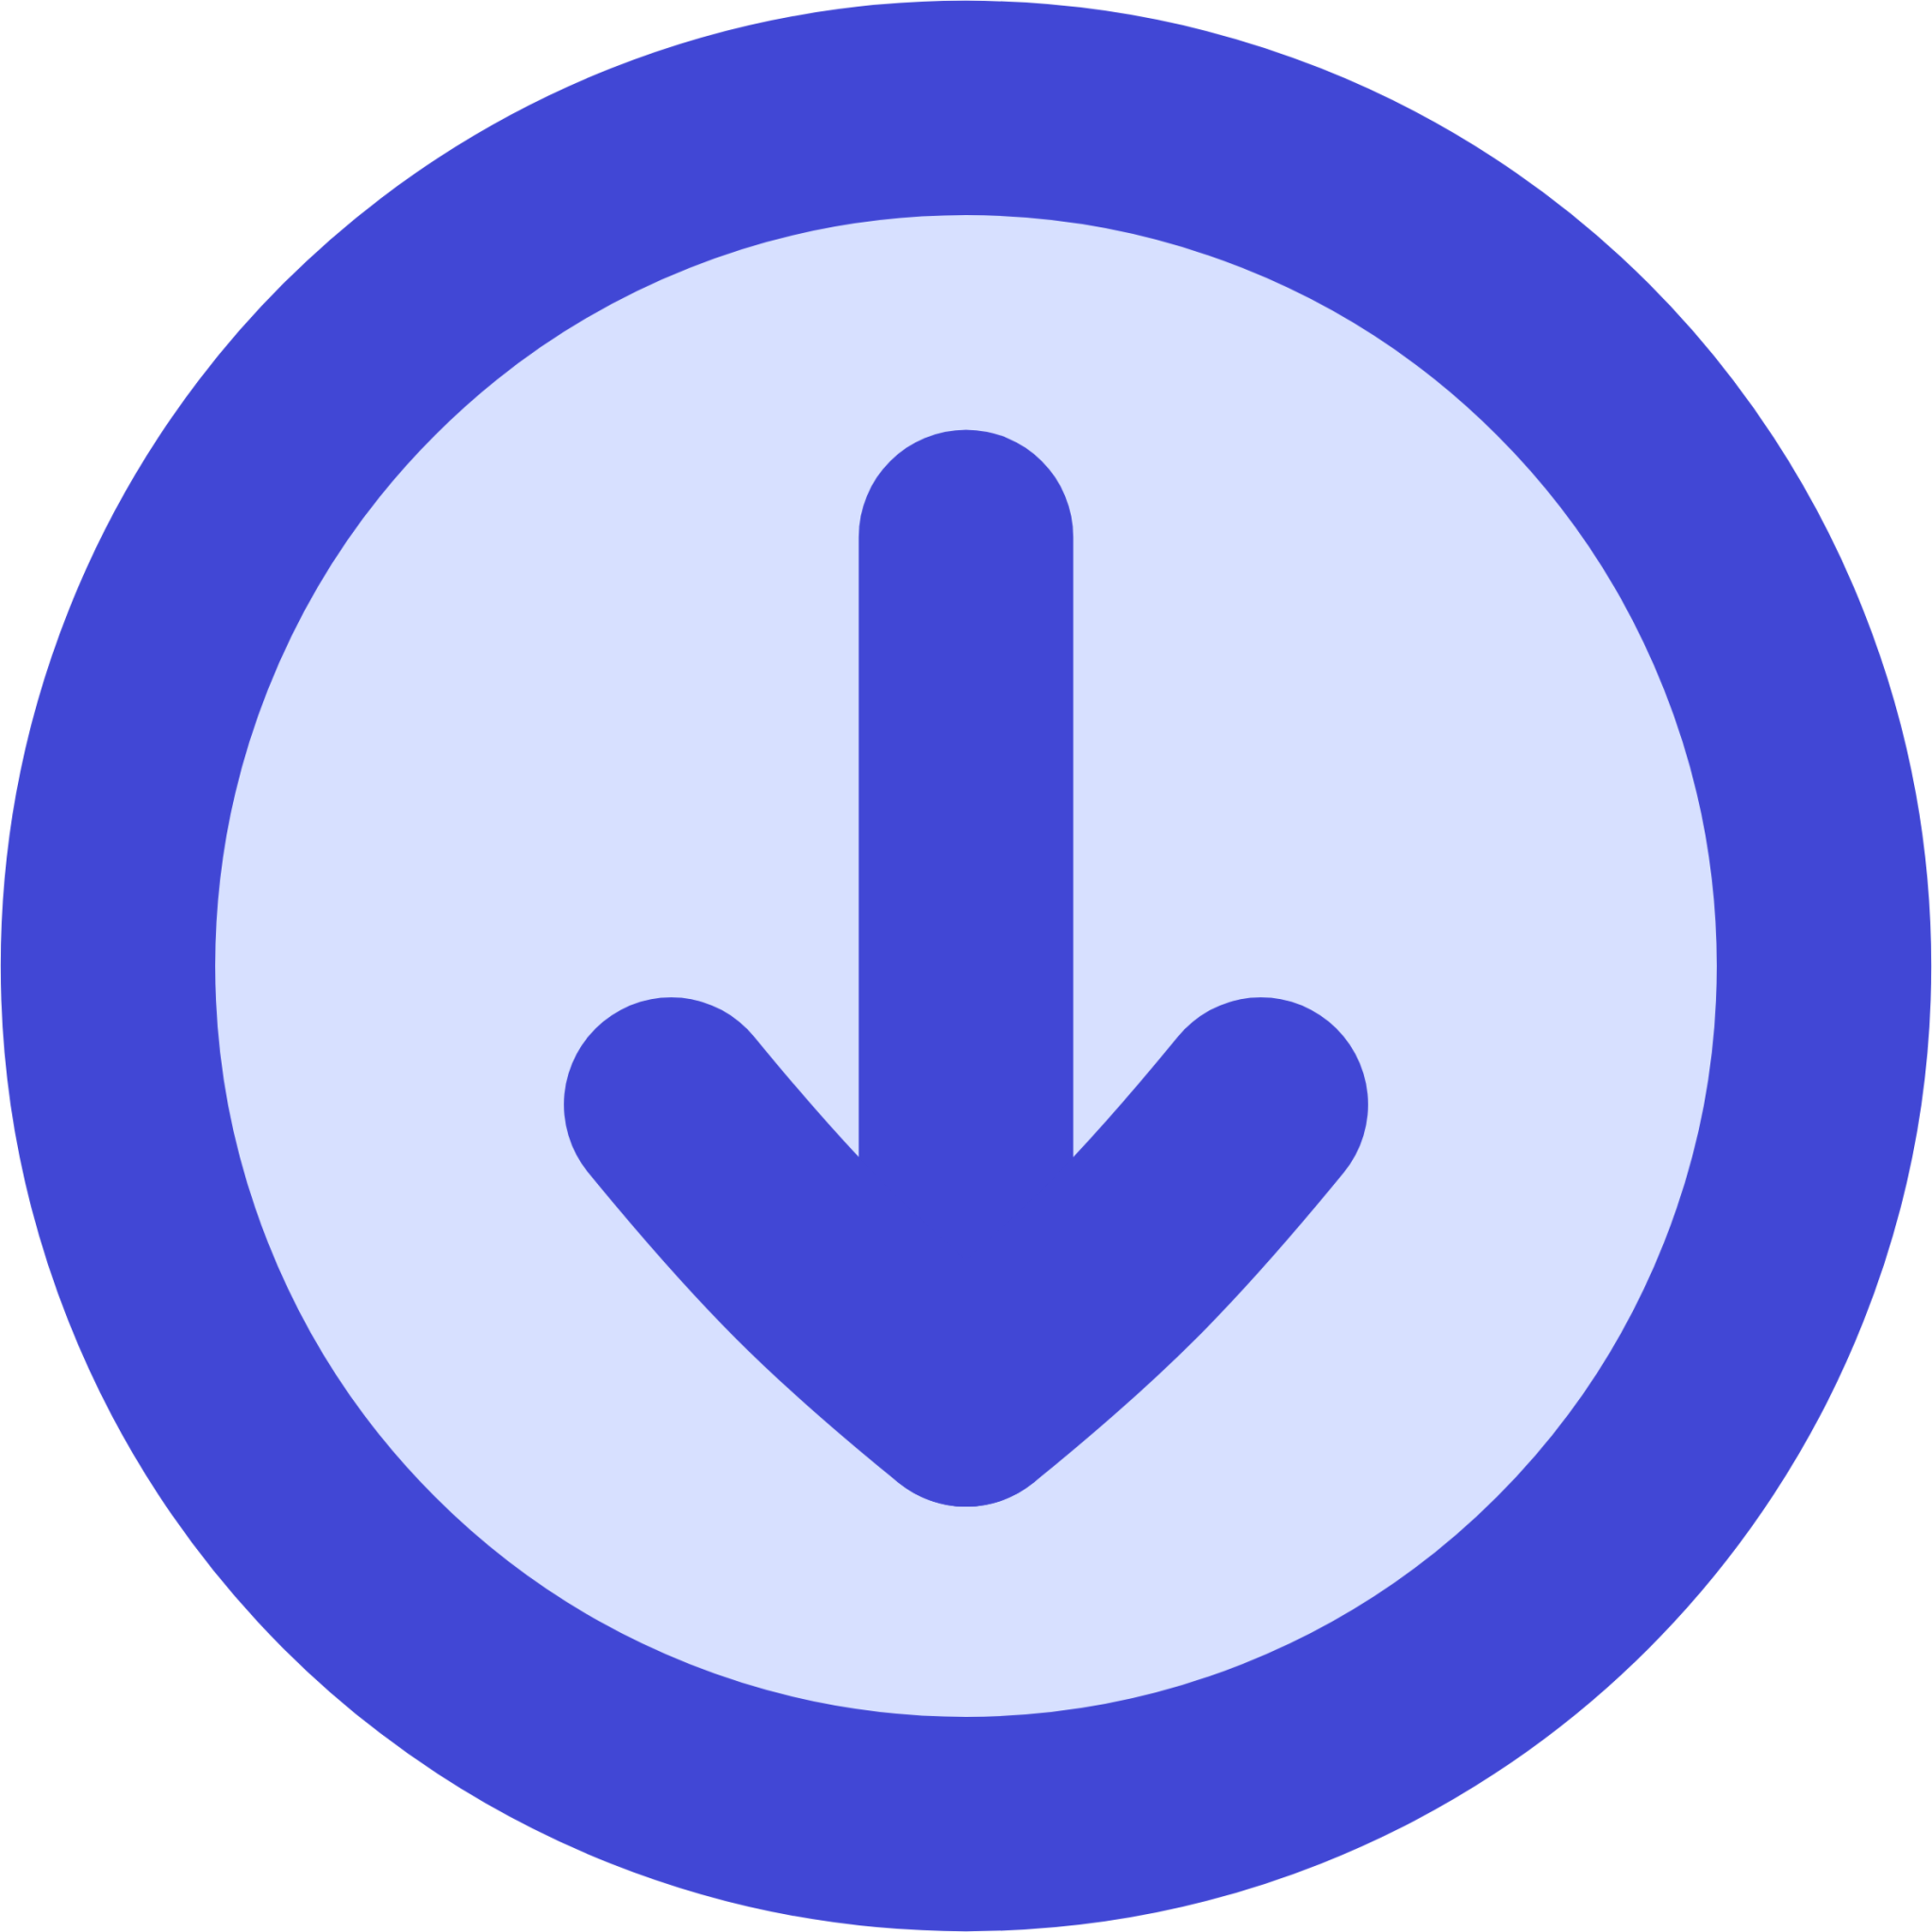 blue arrow icon down